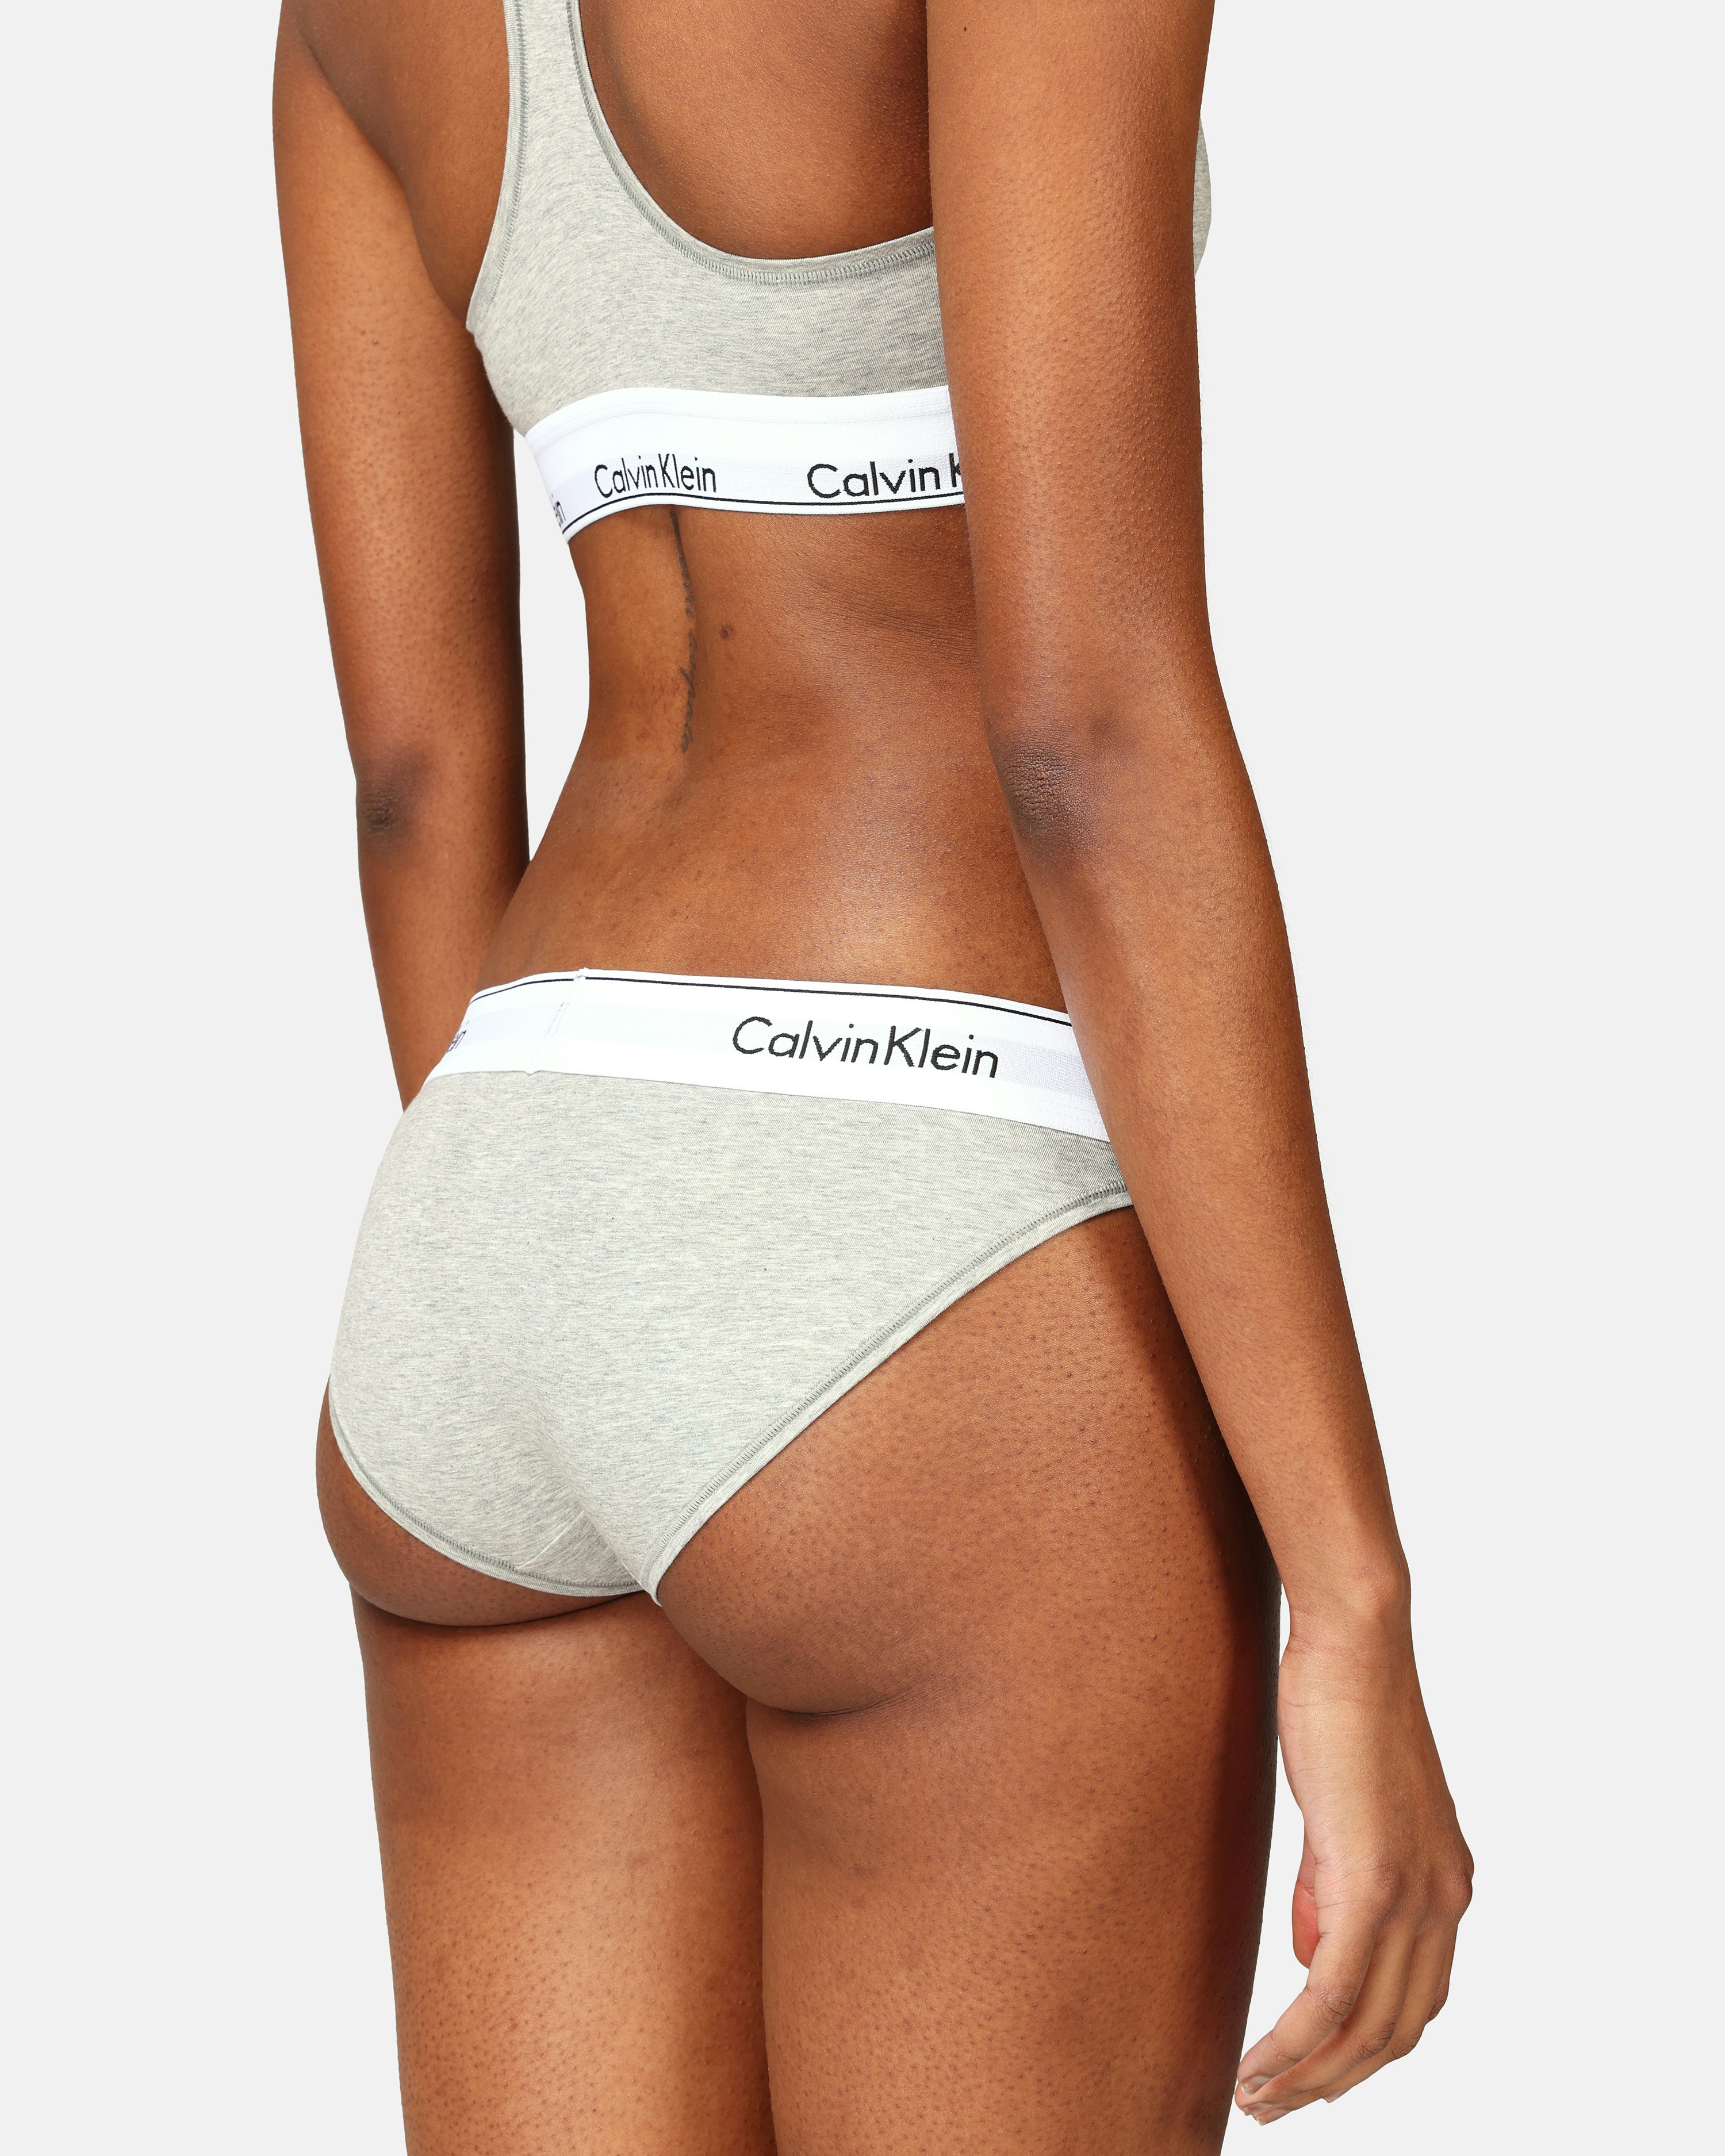 Calvin Klein Underwear Panties Grey, Women